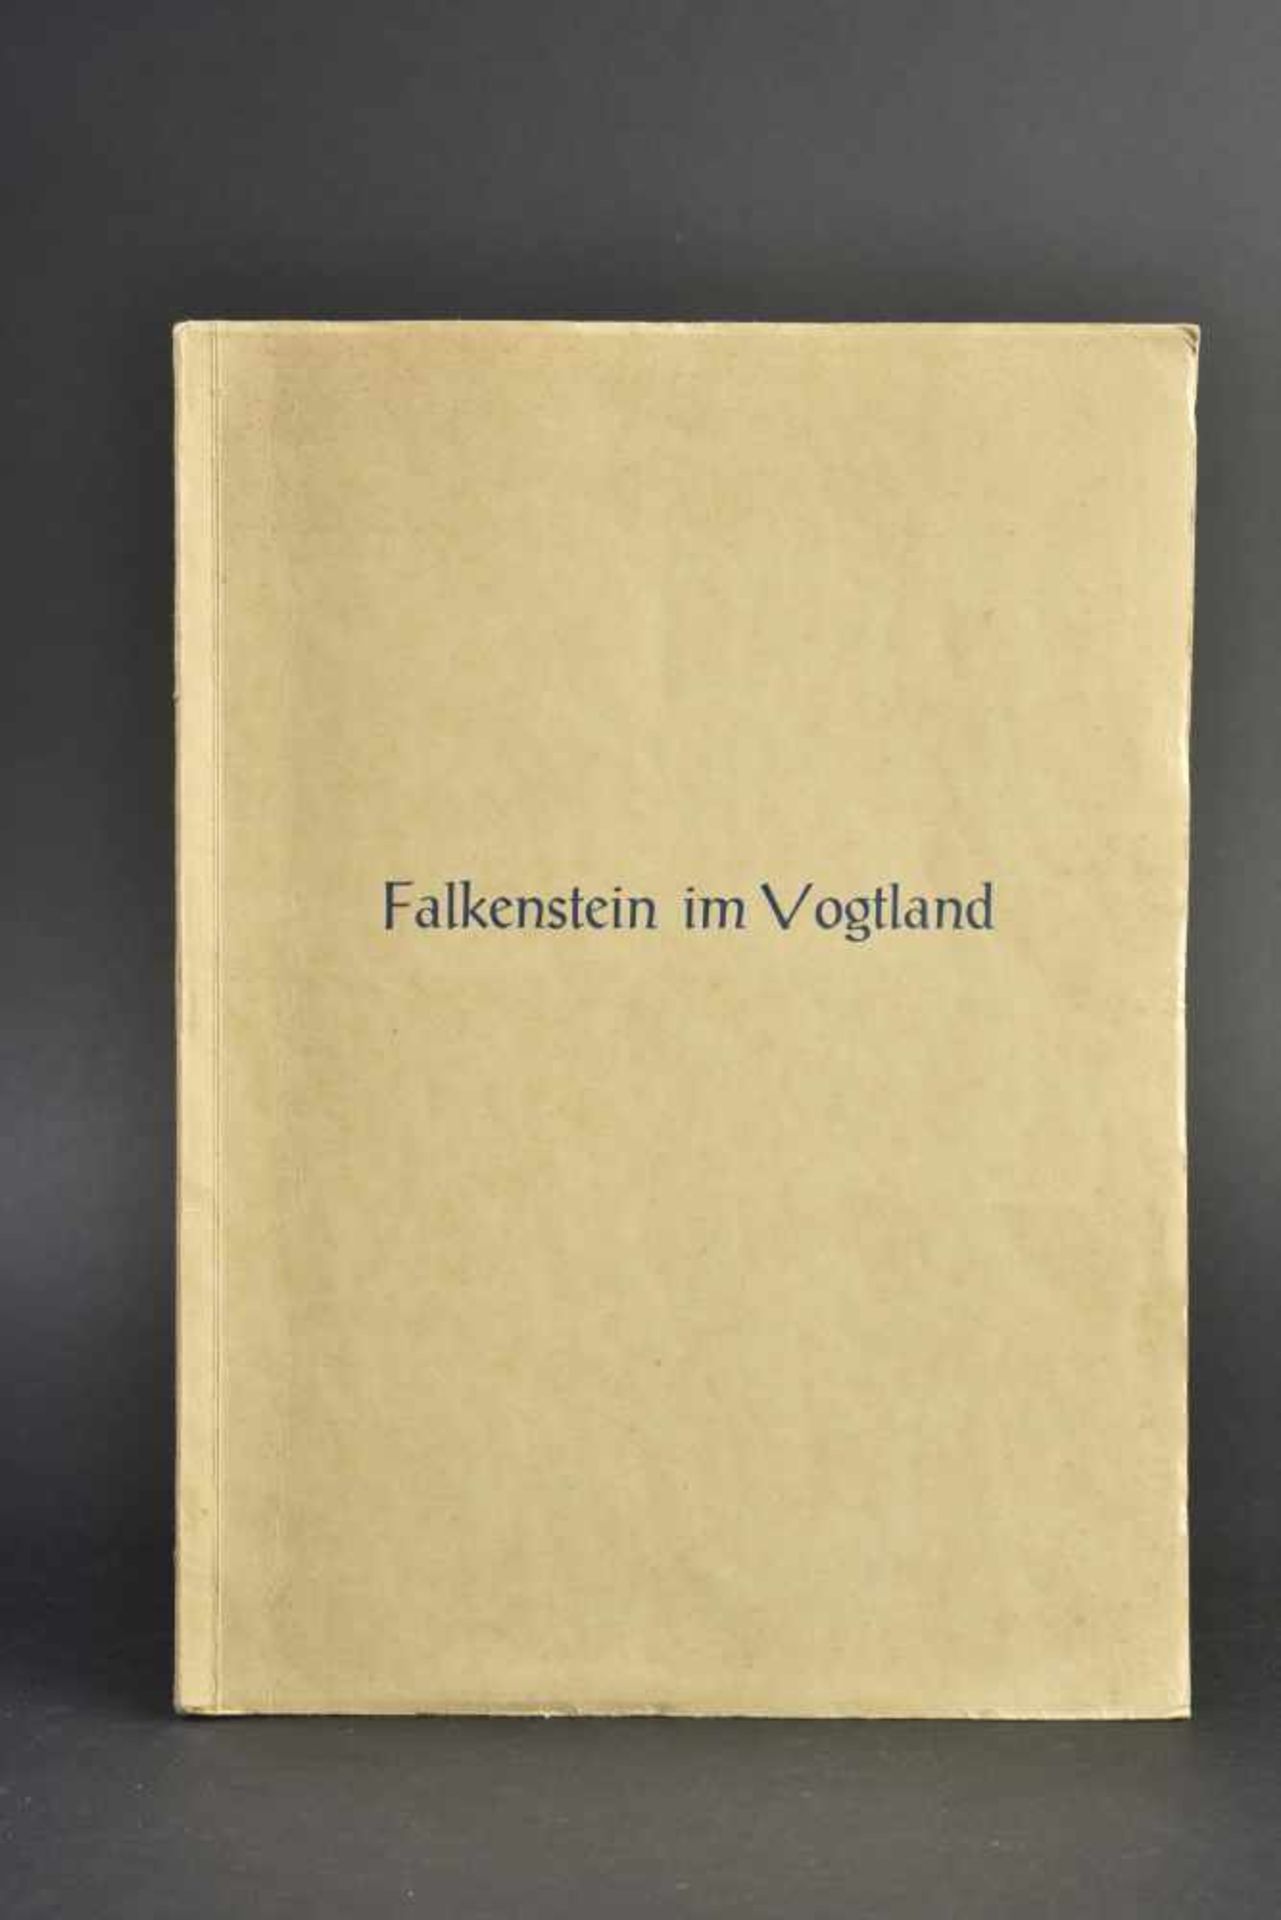 Brochure Falkenstein Complète, intitulé Falkenstein Im Vogtland. Datée du 15 mars 1943. A noter